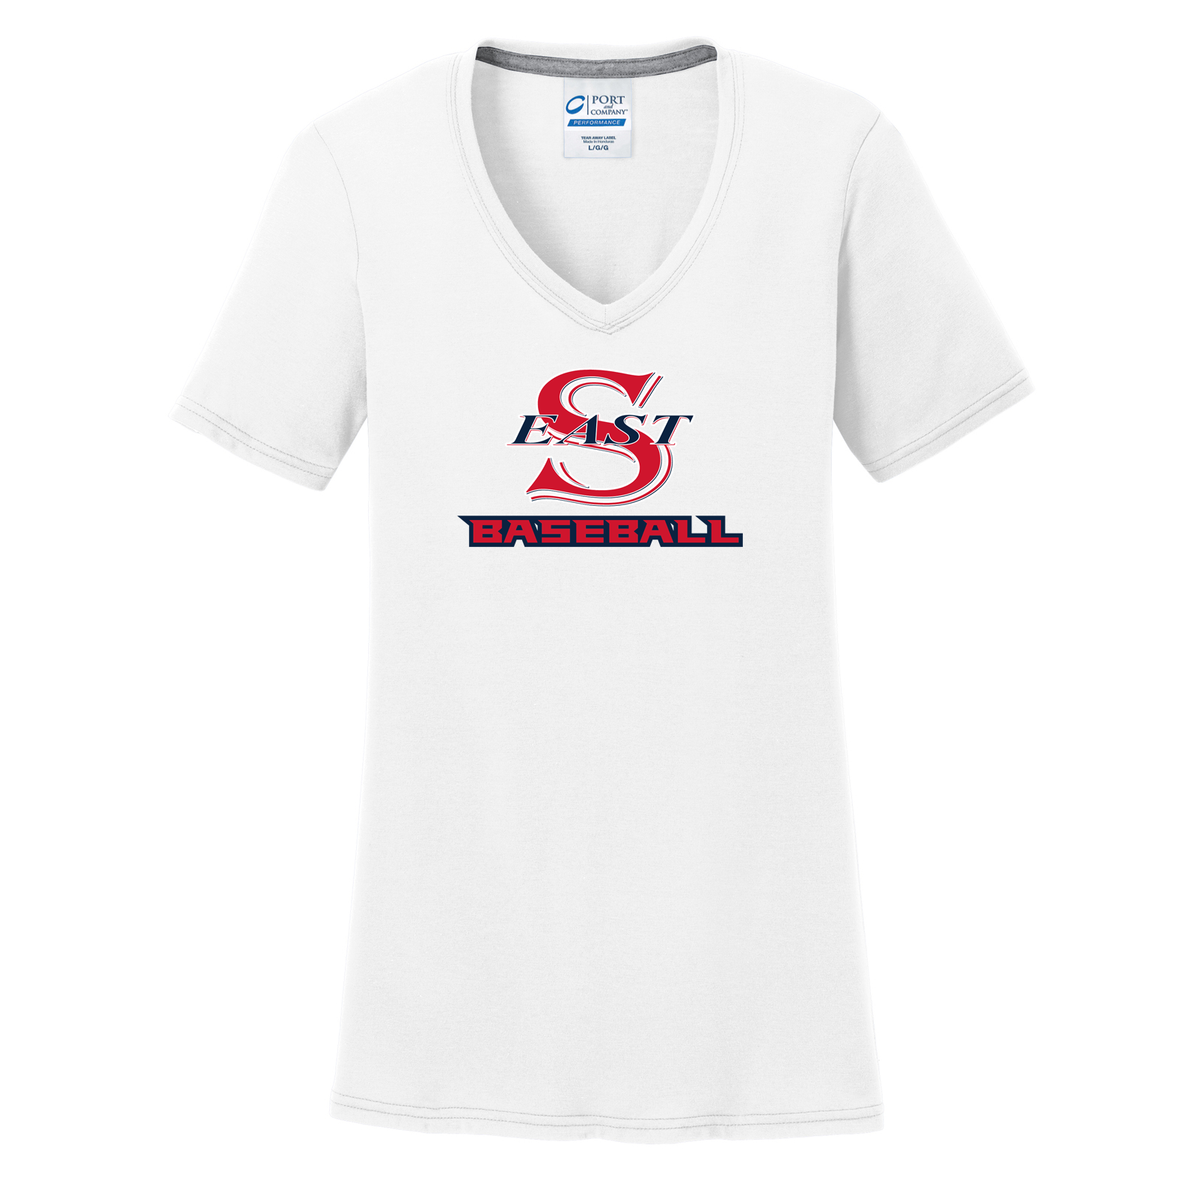 Smithtown East Baseball Women's T-Shirt